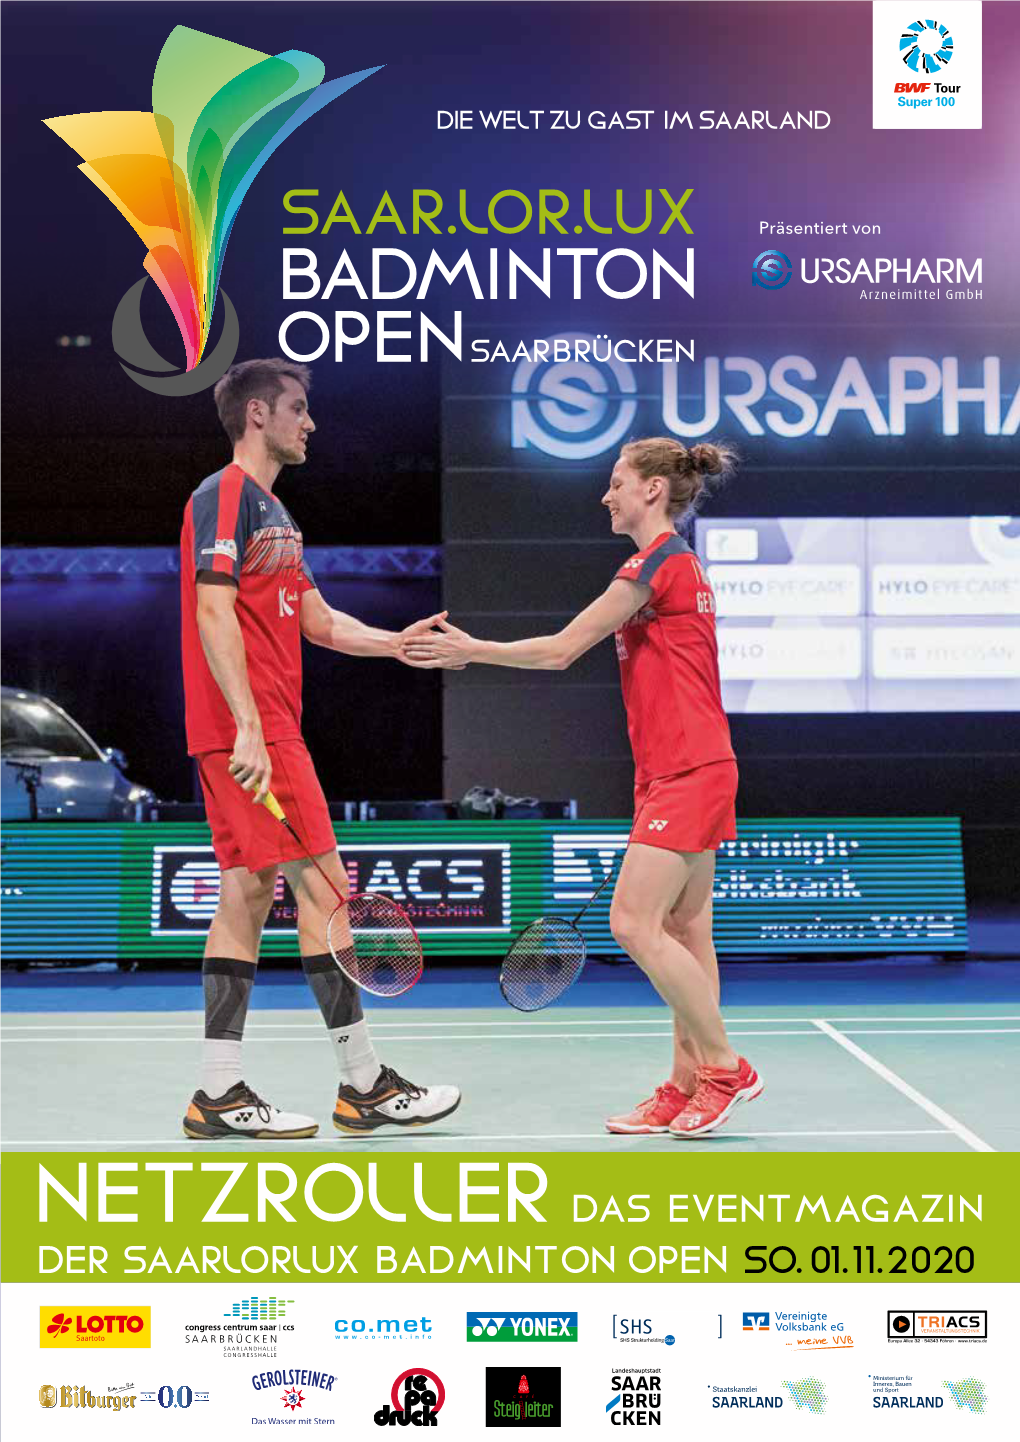 Netzroller Das Eventmagazin Der Saarlorlux Badminton Open So